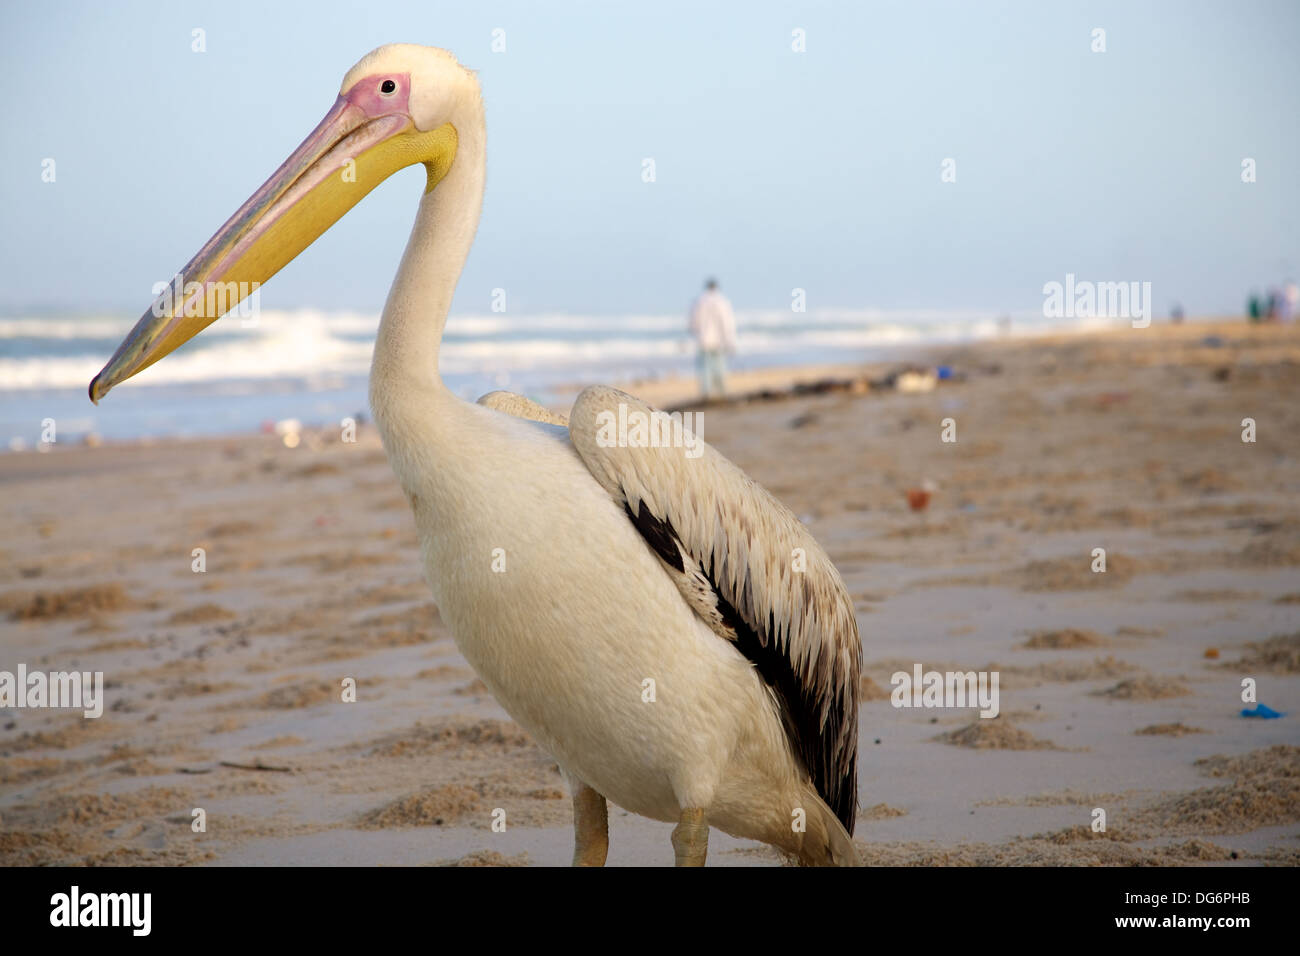 Pelican on the beach. Stock Photo